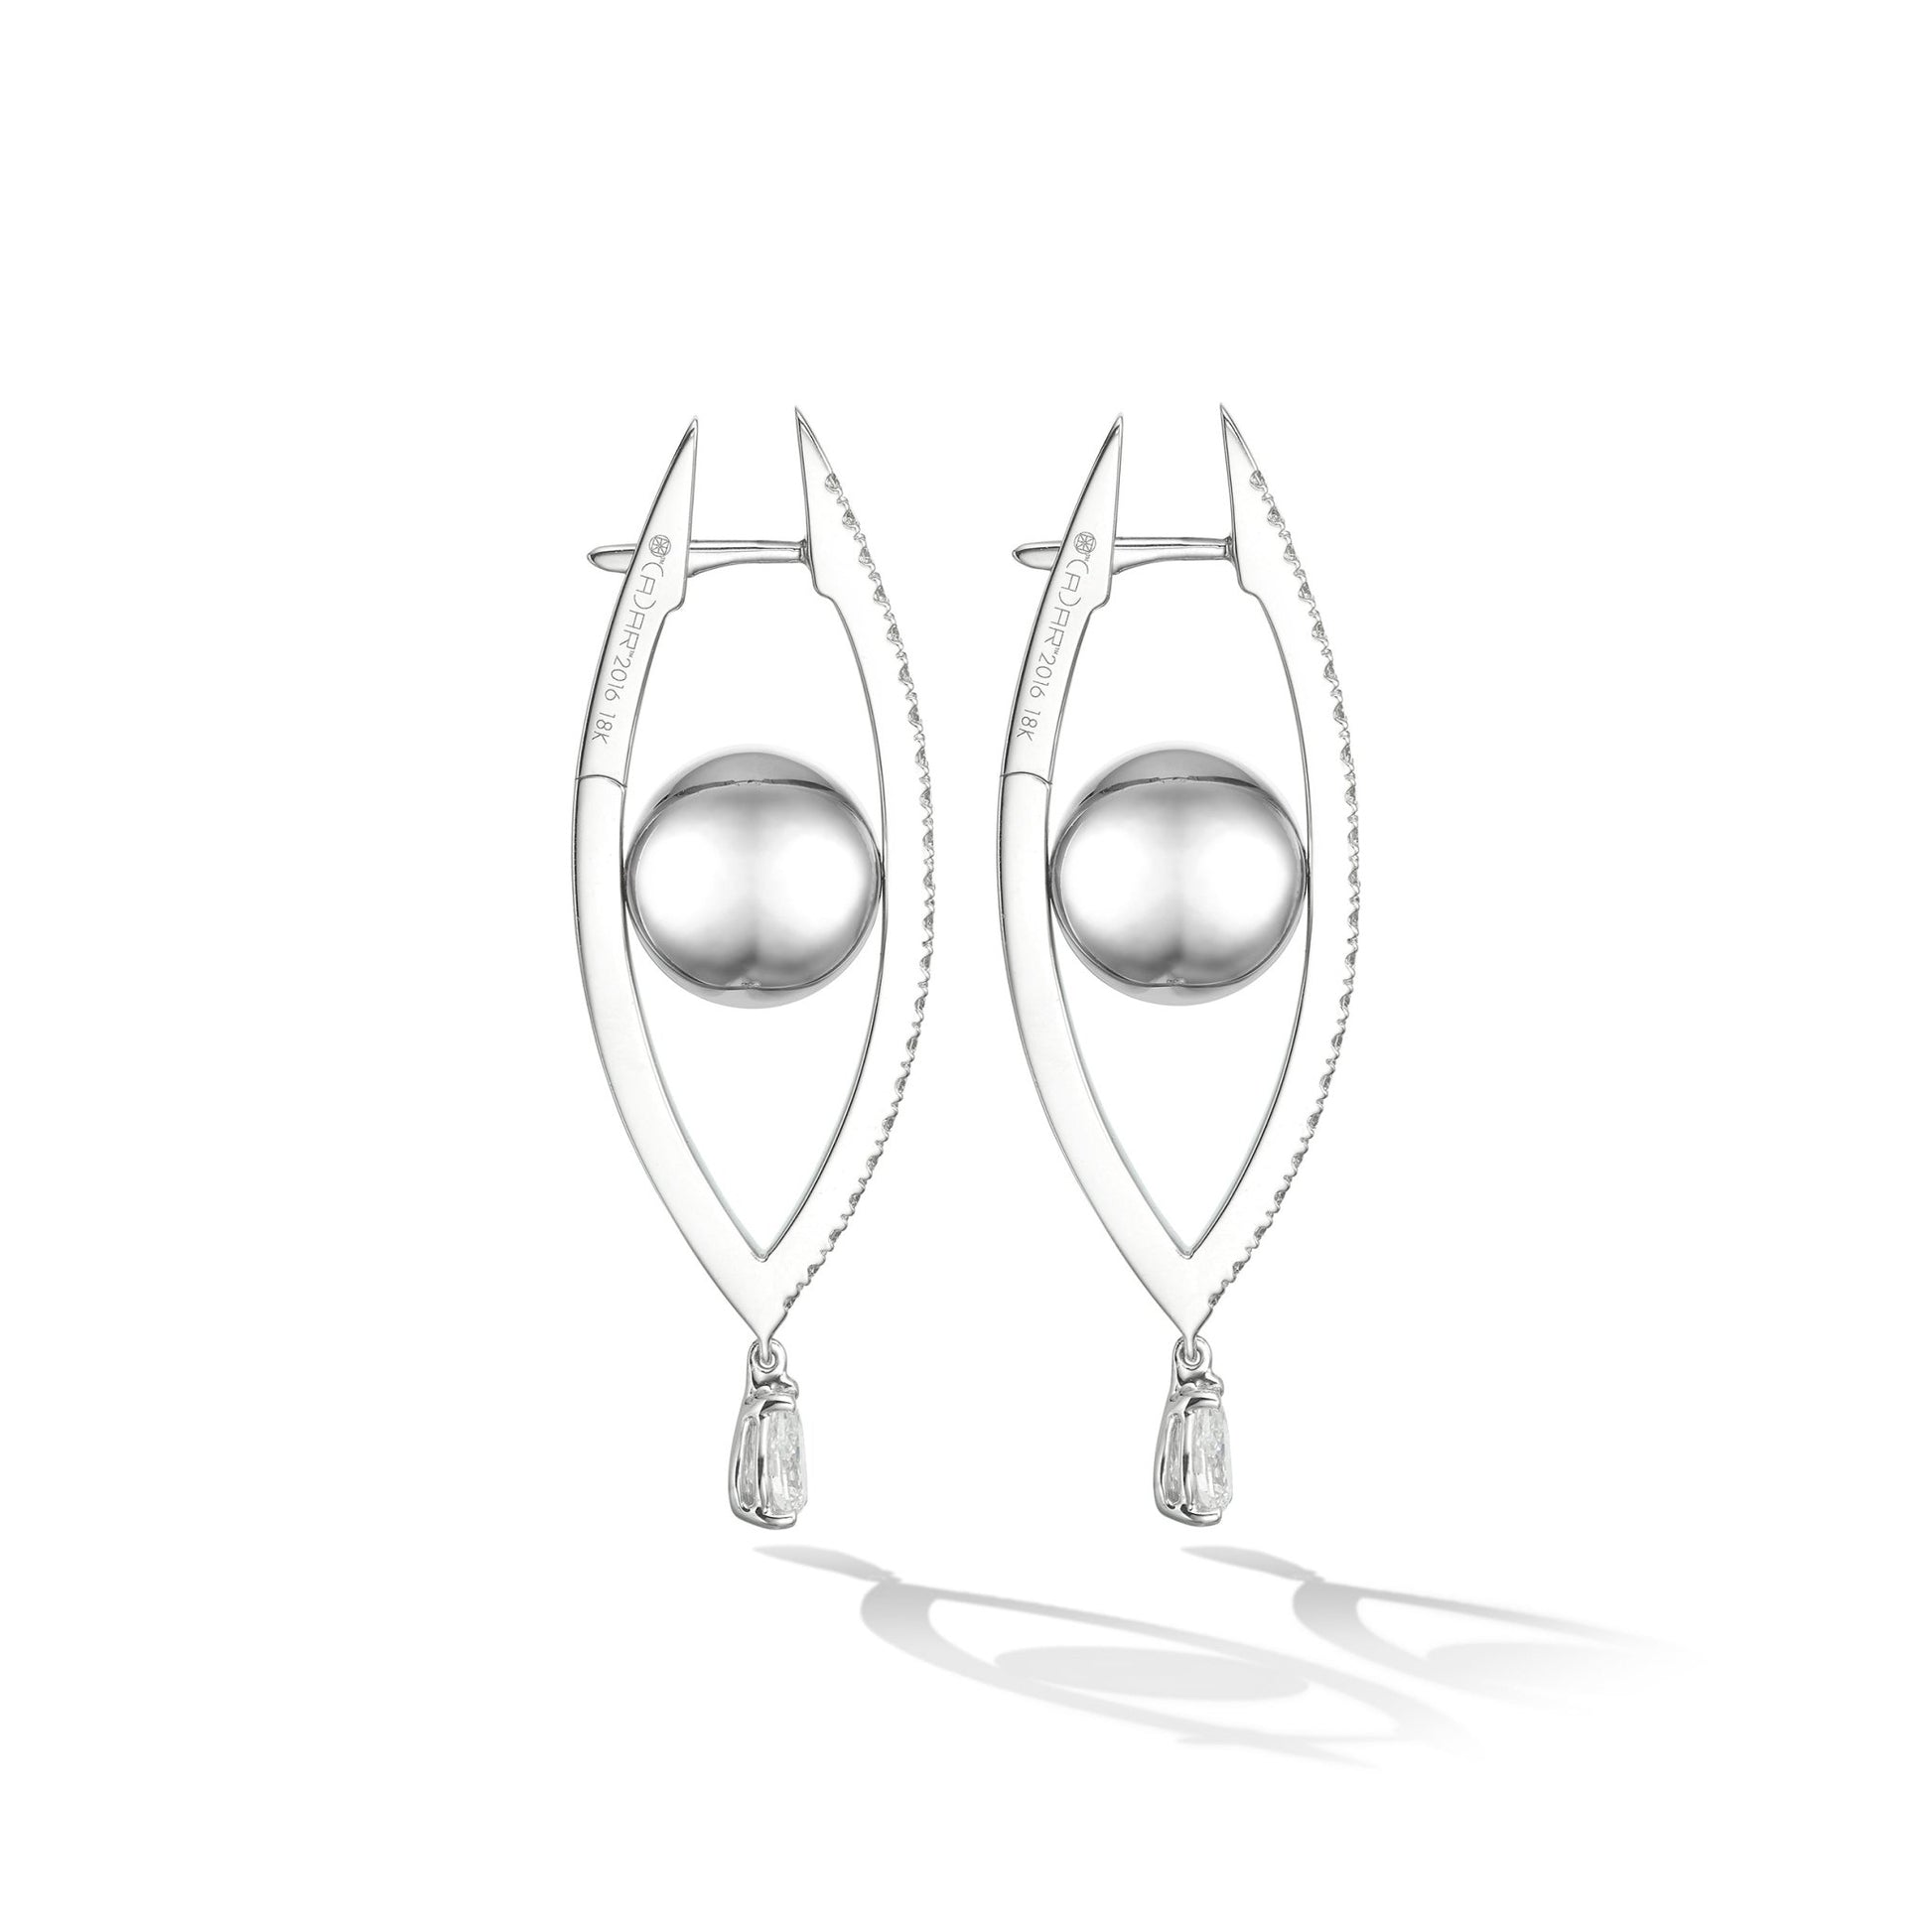 Medium White Gold Reflections Hoop Earrings with White Diamonds - Cadar